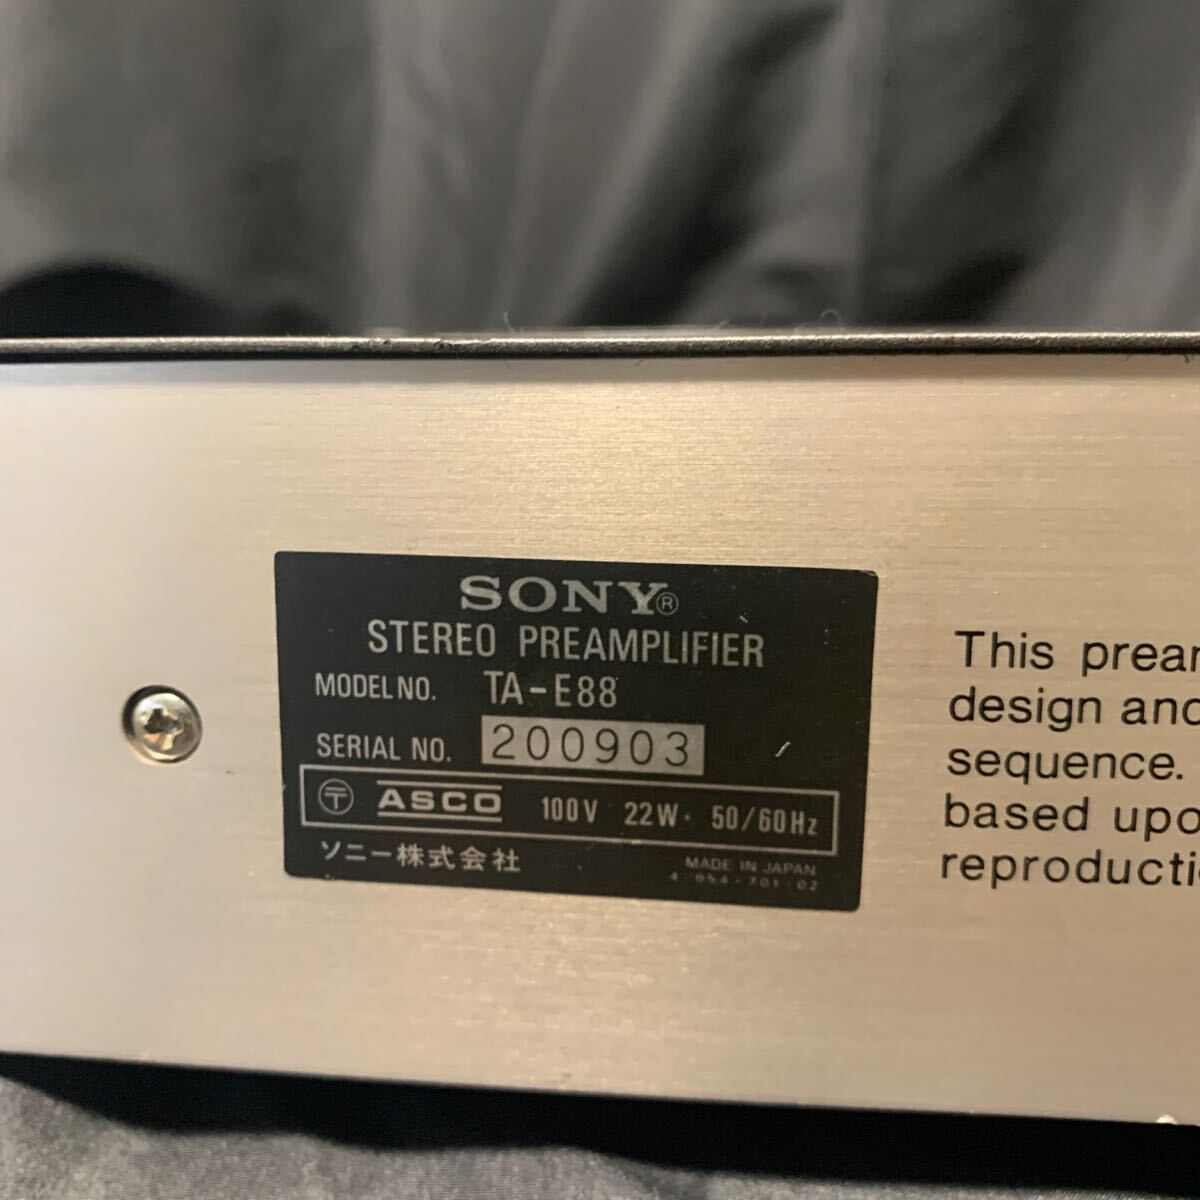 SONY TA-E88 stereo preamplifier Sony стерео предусилитель электризация подтверждено звук оборудование звуковая аппаратура 